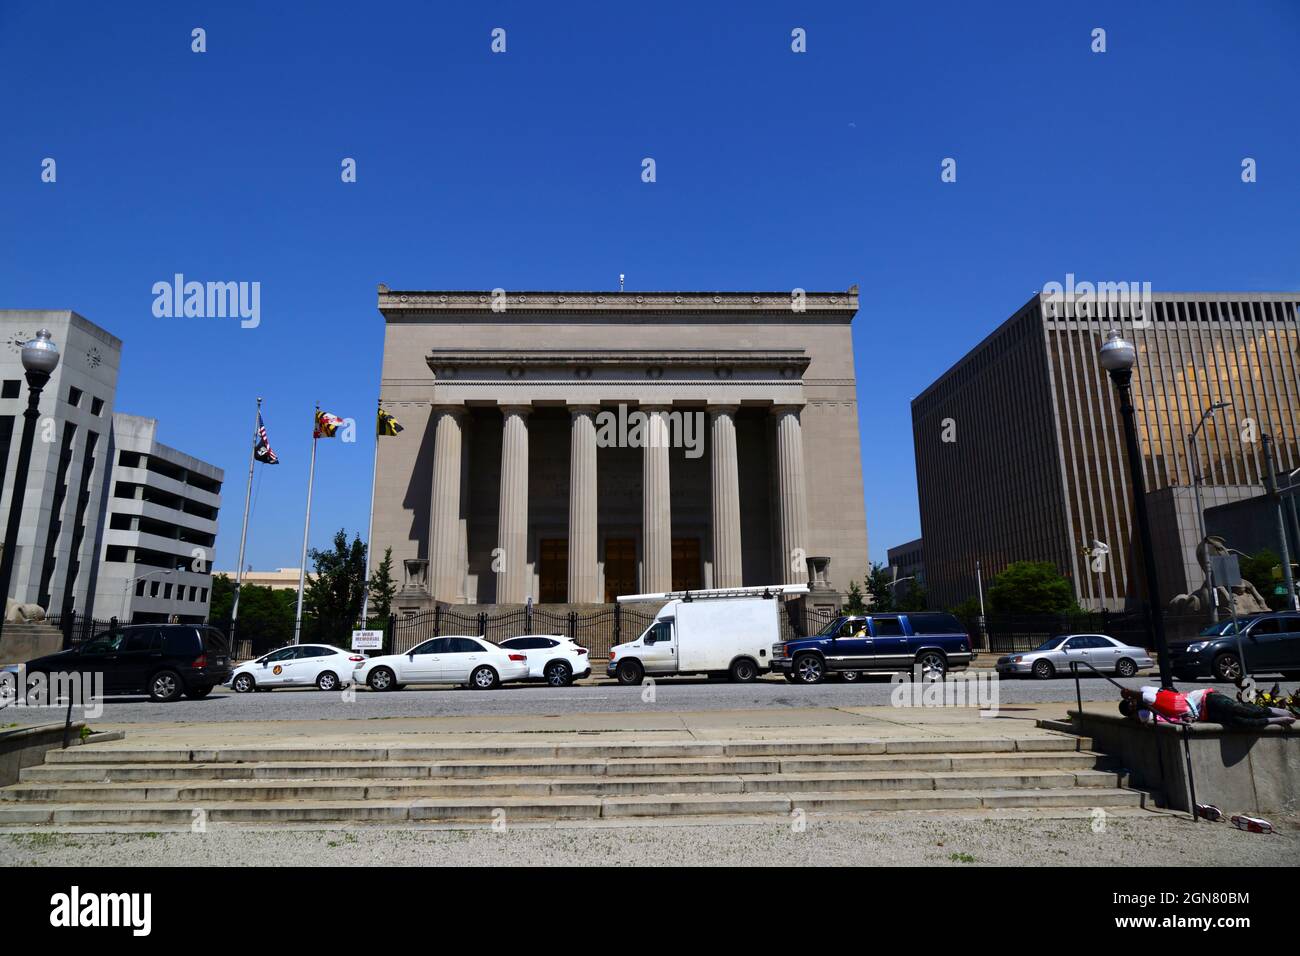 Baltimore War Memorial (101 N gay St) et War Memorial Plaza, Baltimore, Maryland, États-Unis Banque D'Images